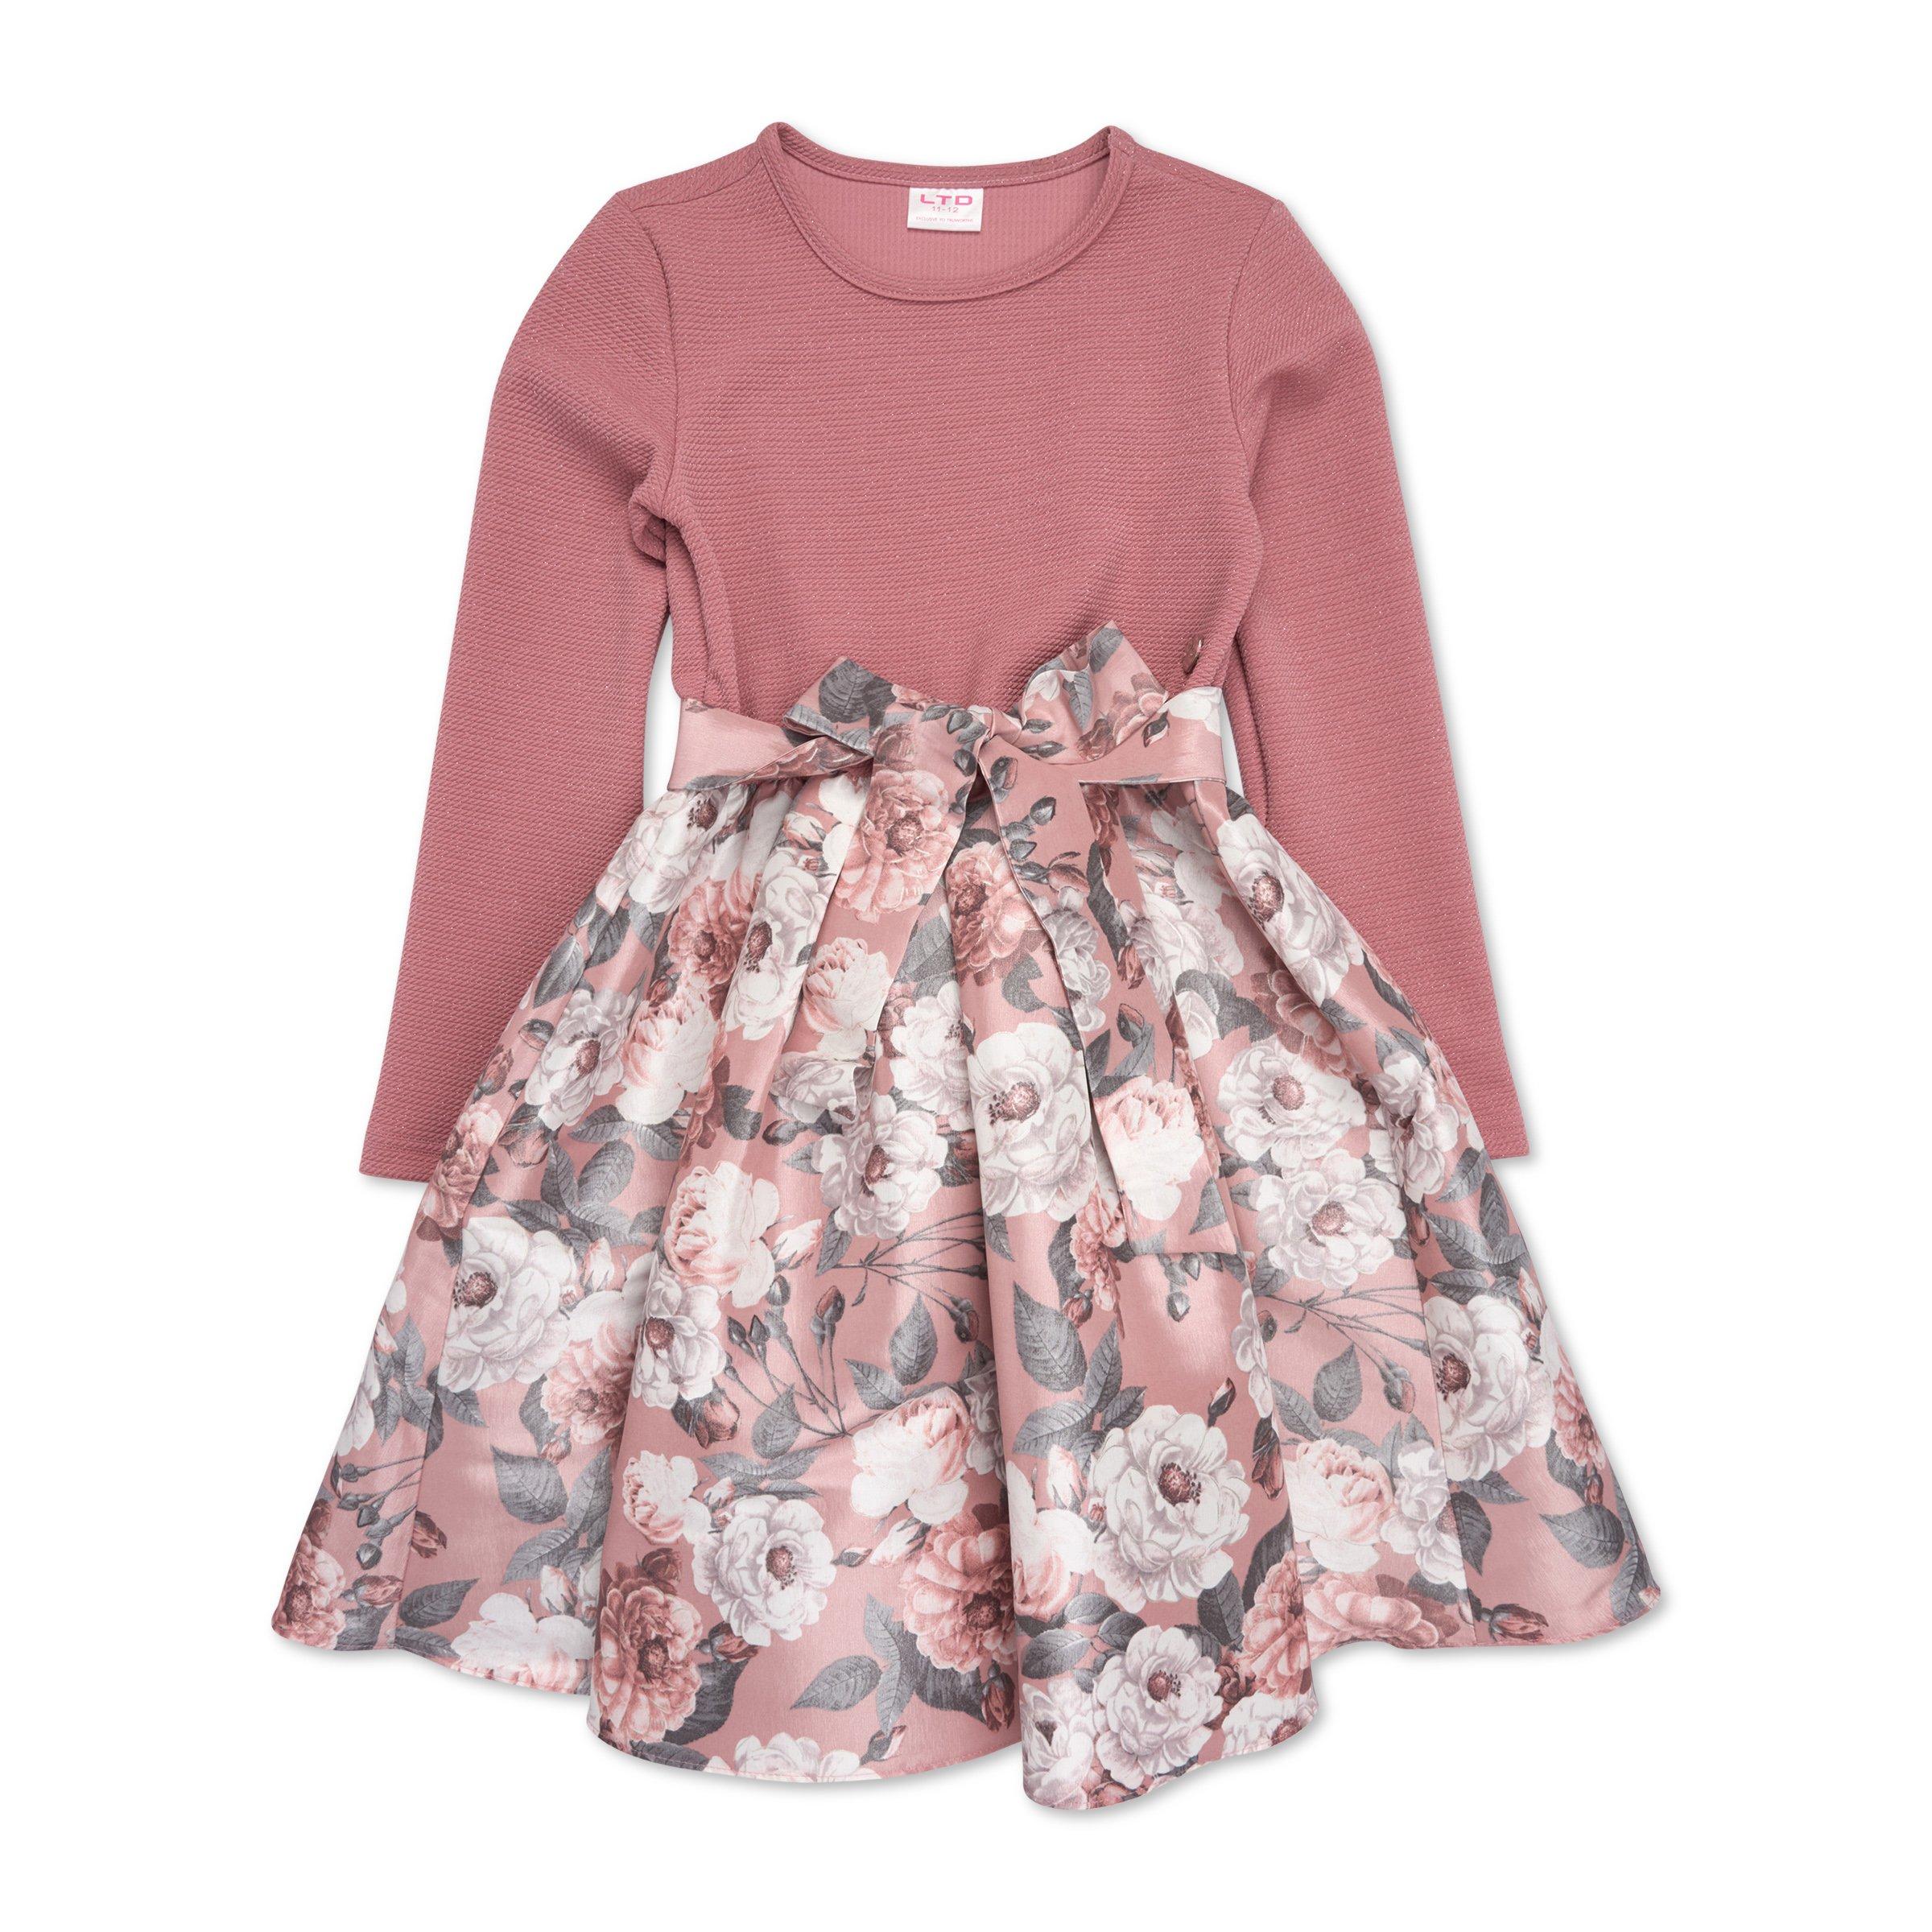 Buy LTD Kids Floral Party Dress Online | Truworths